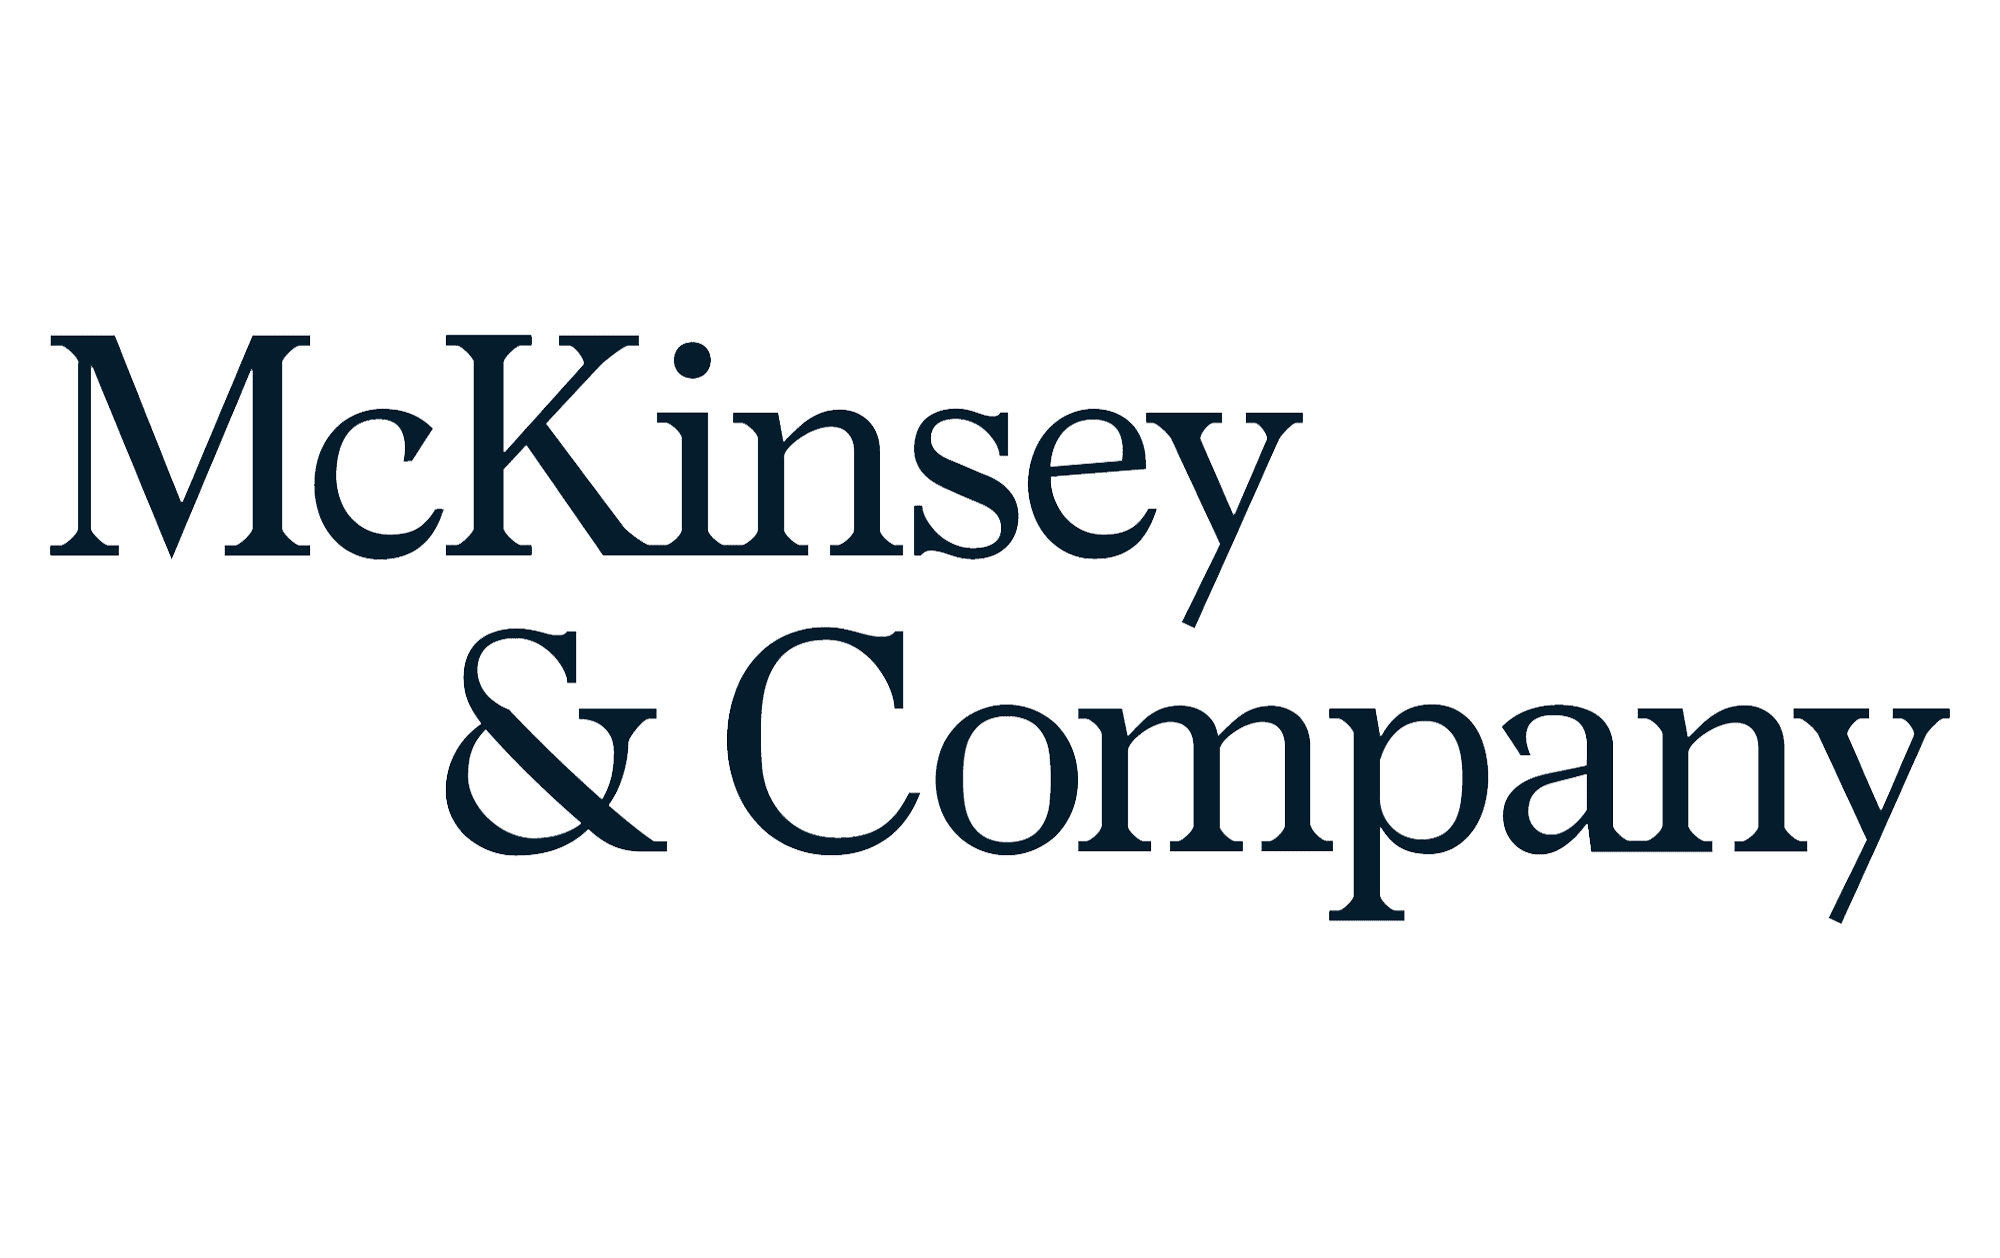 Download McKinsey & Company Logo in SVG Vector or PNG File Format - Logo .wine